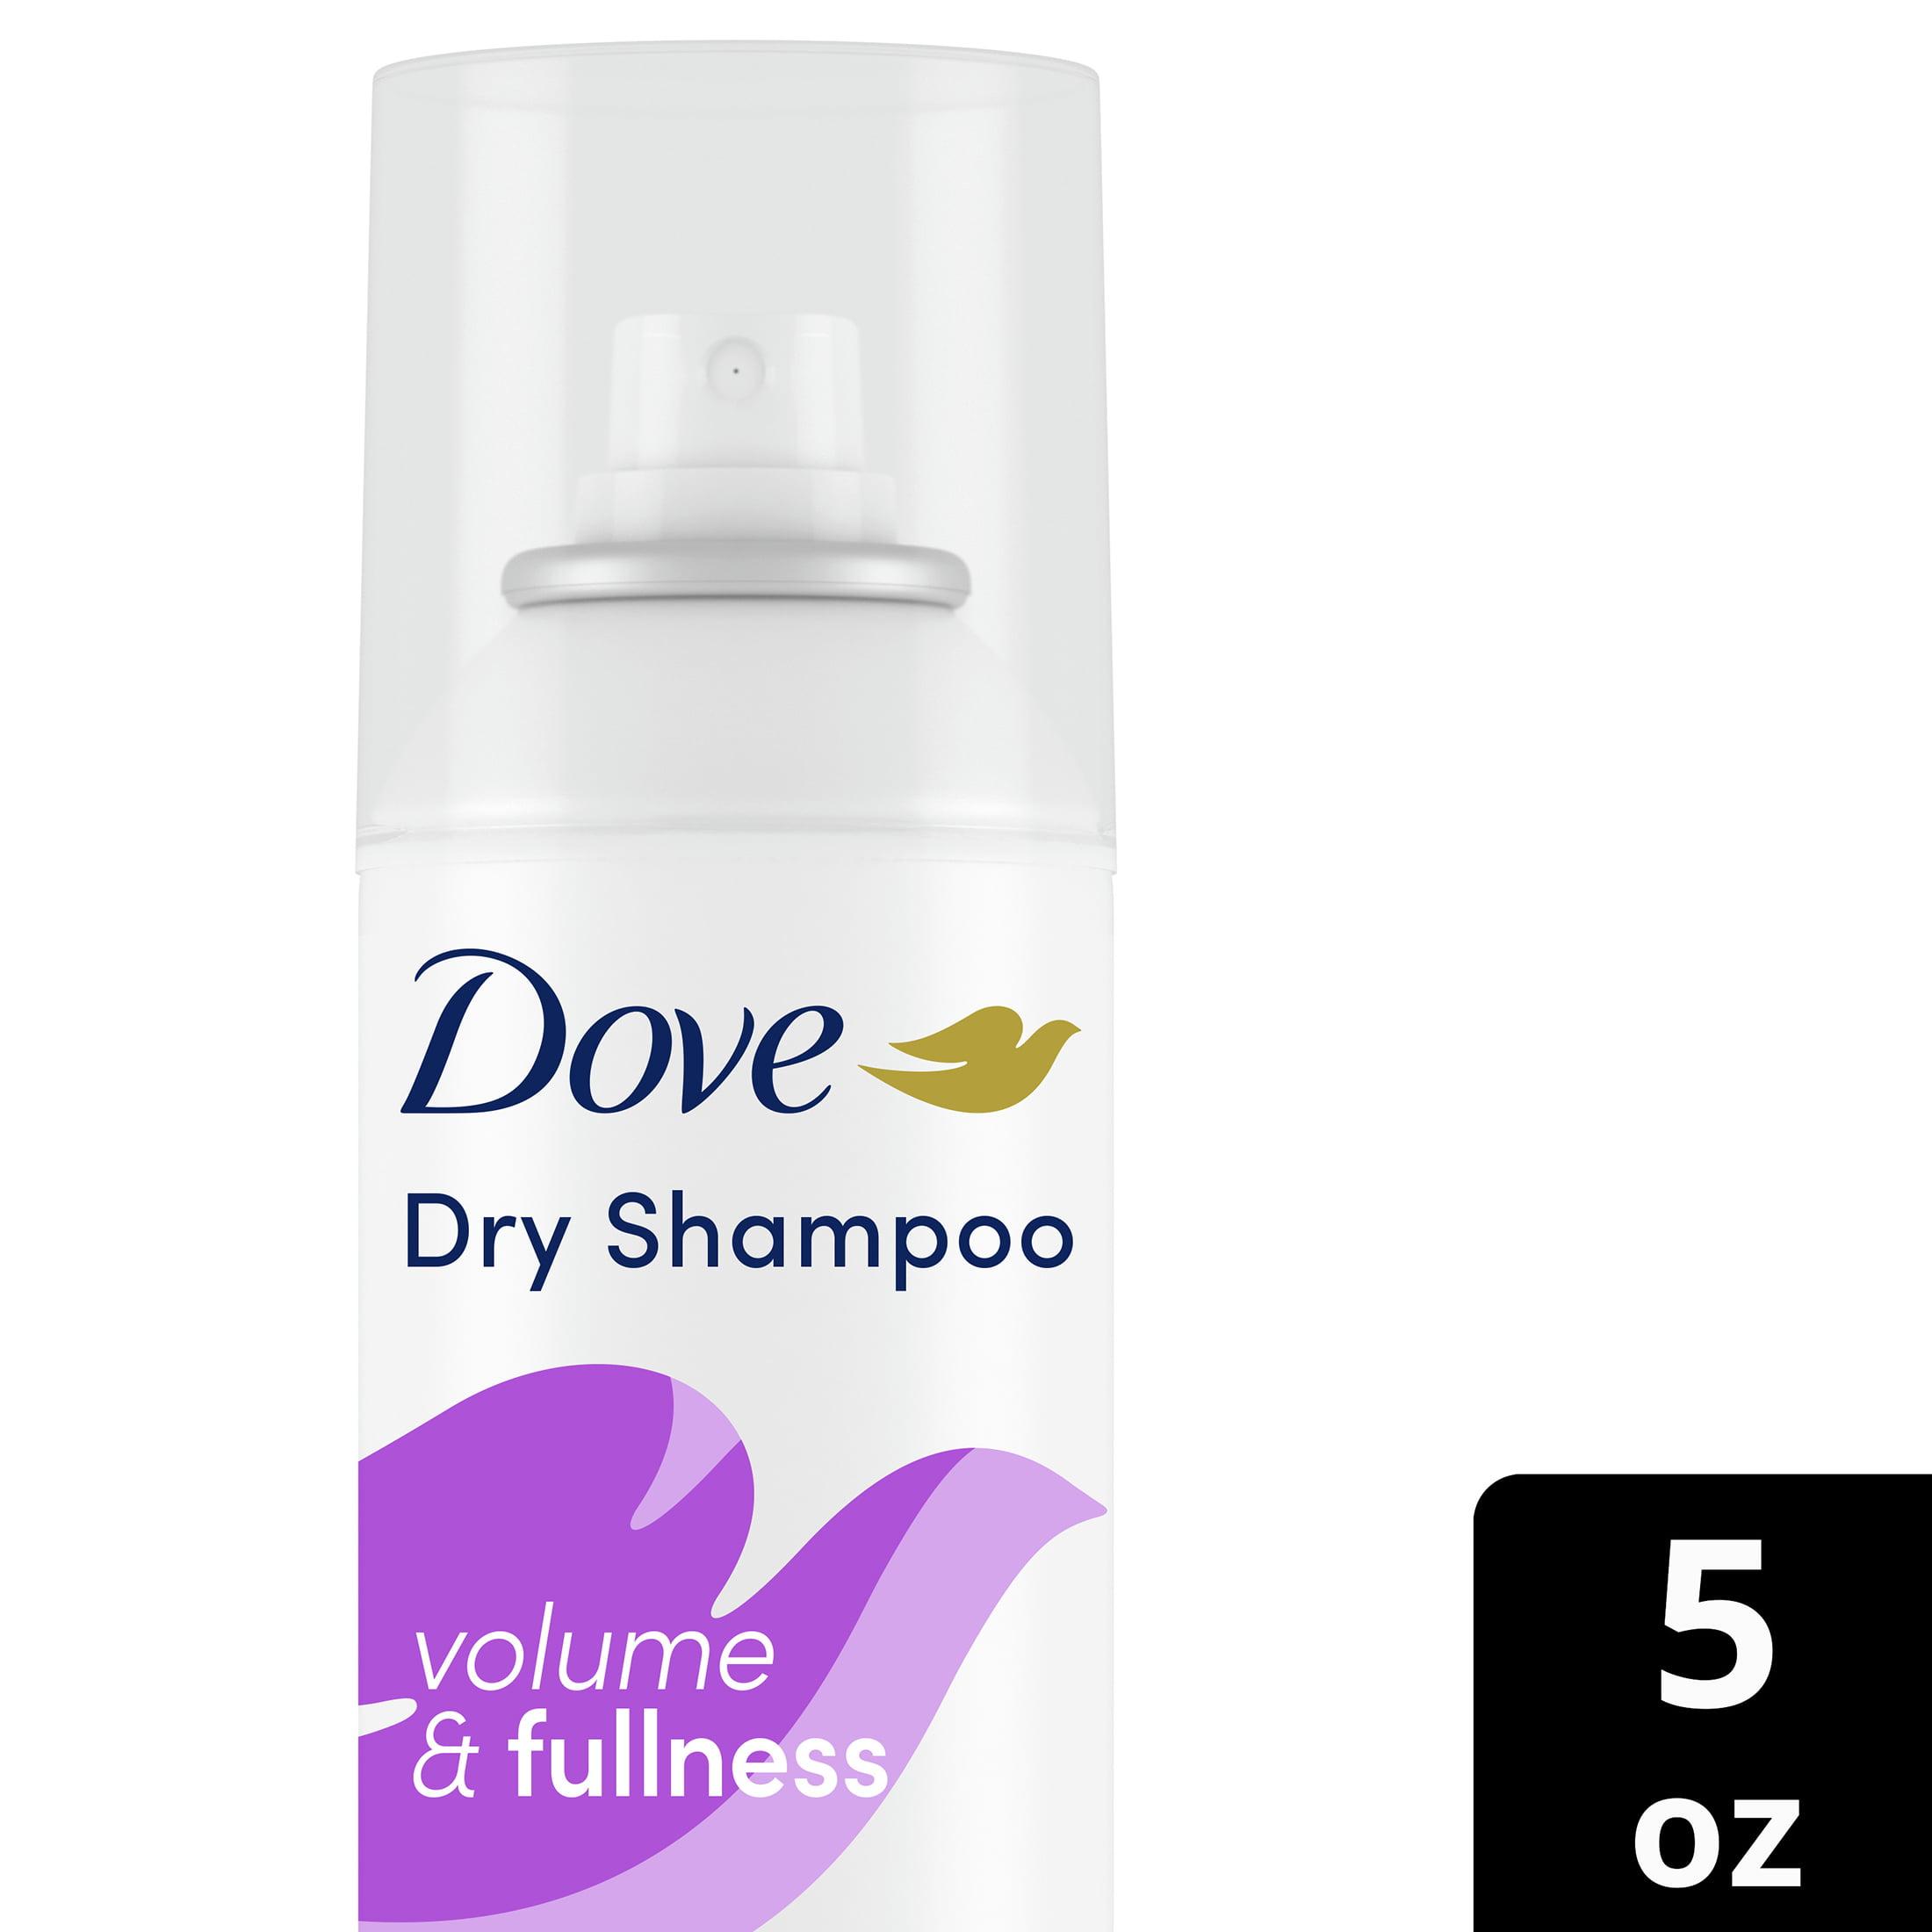 Dove Advanced Volume and Fullness Dry Shampoo, 5 oz - image 8 of 8